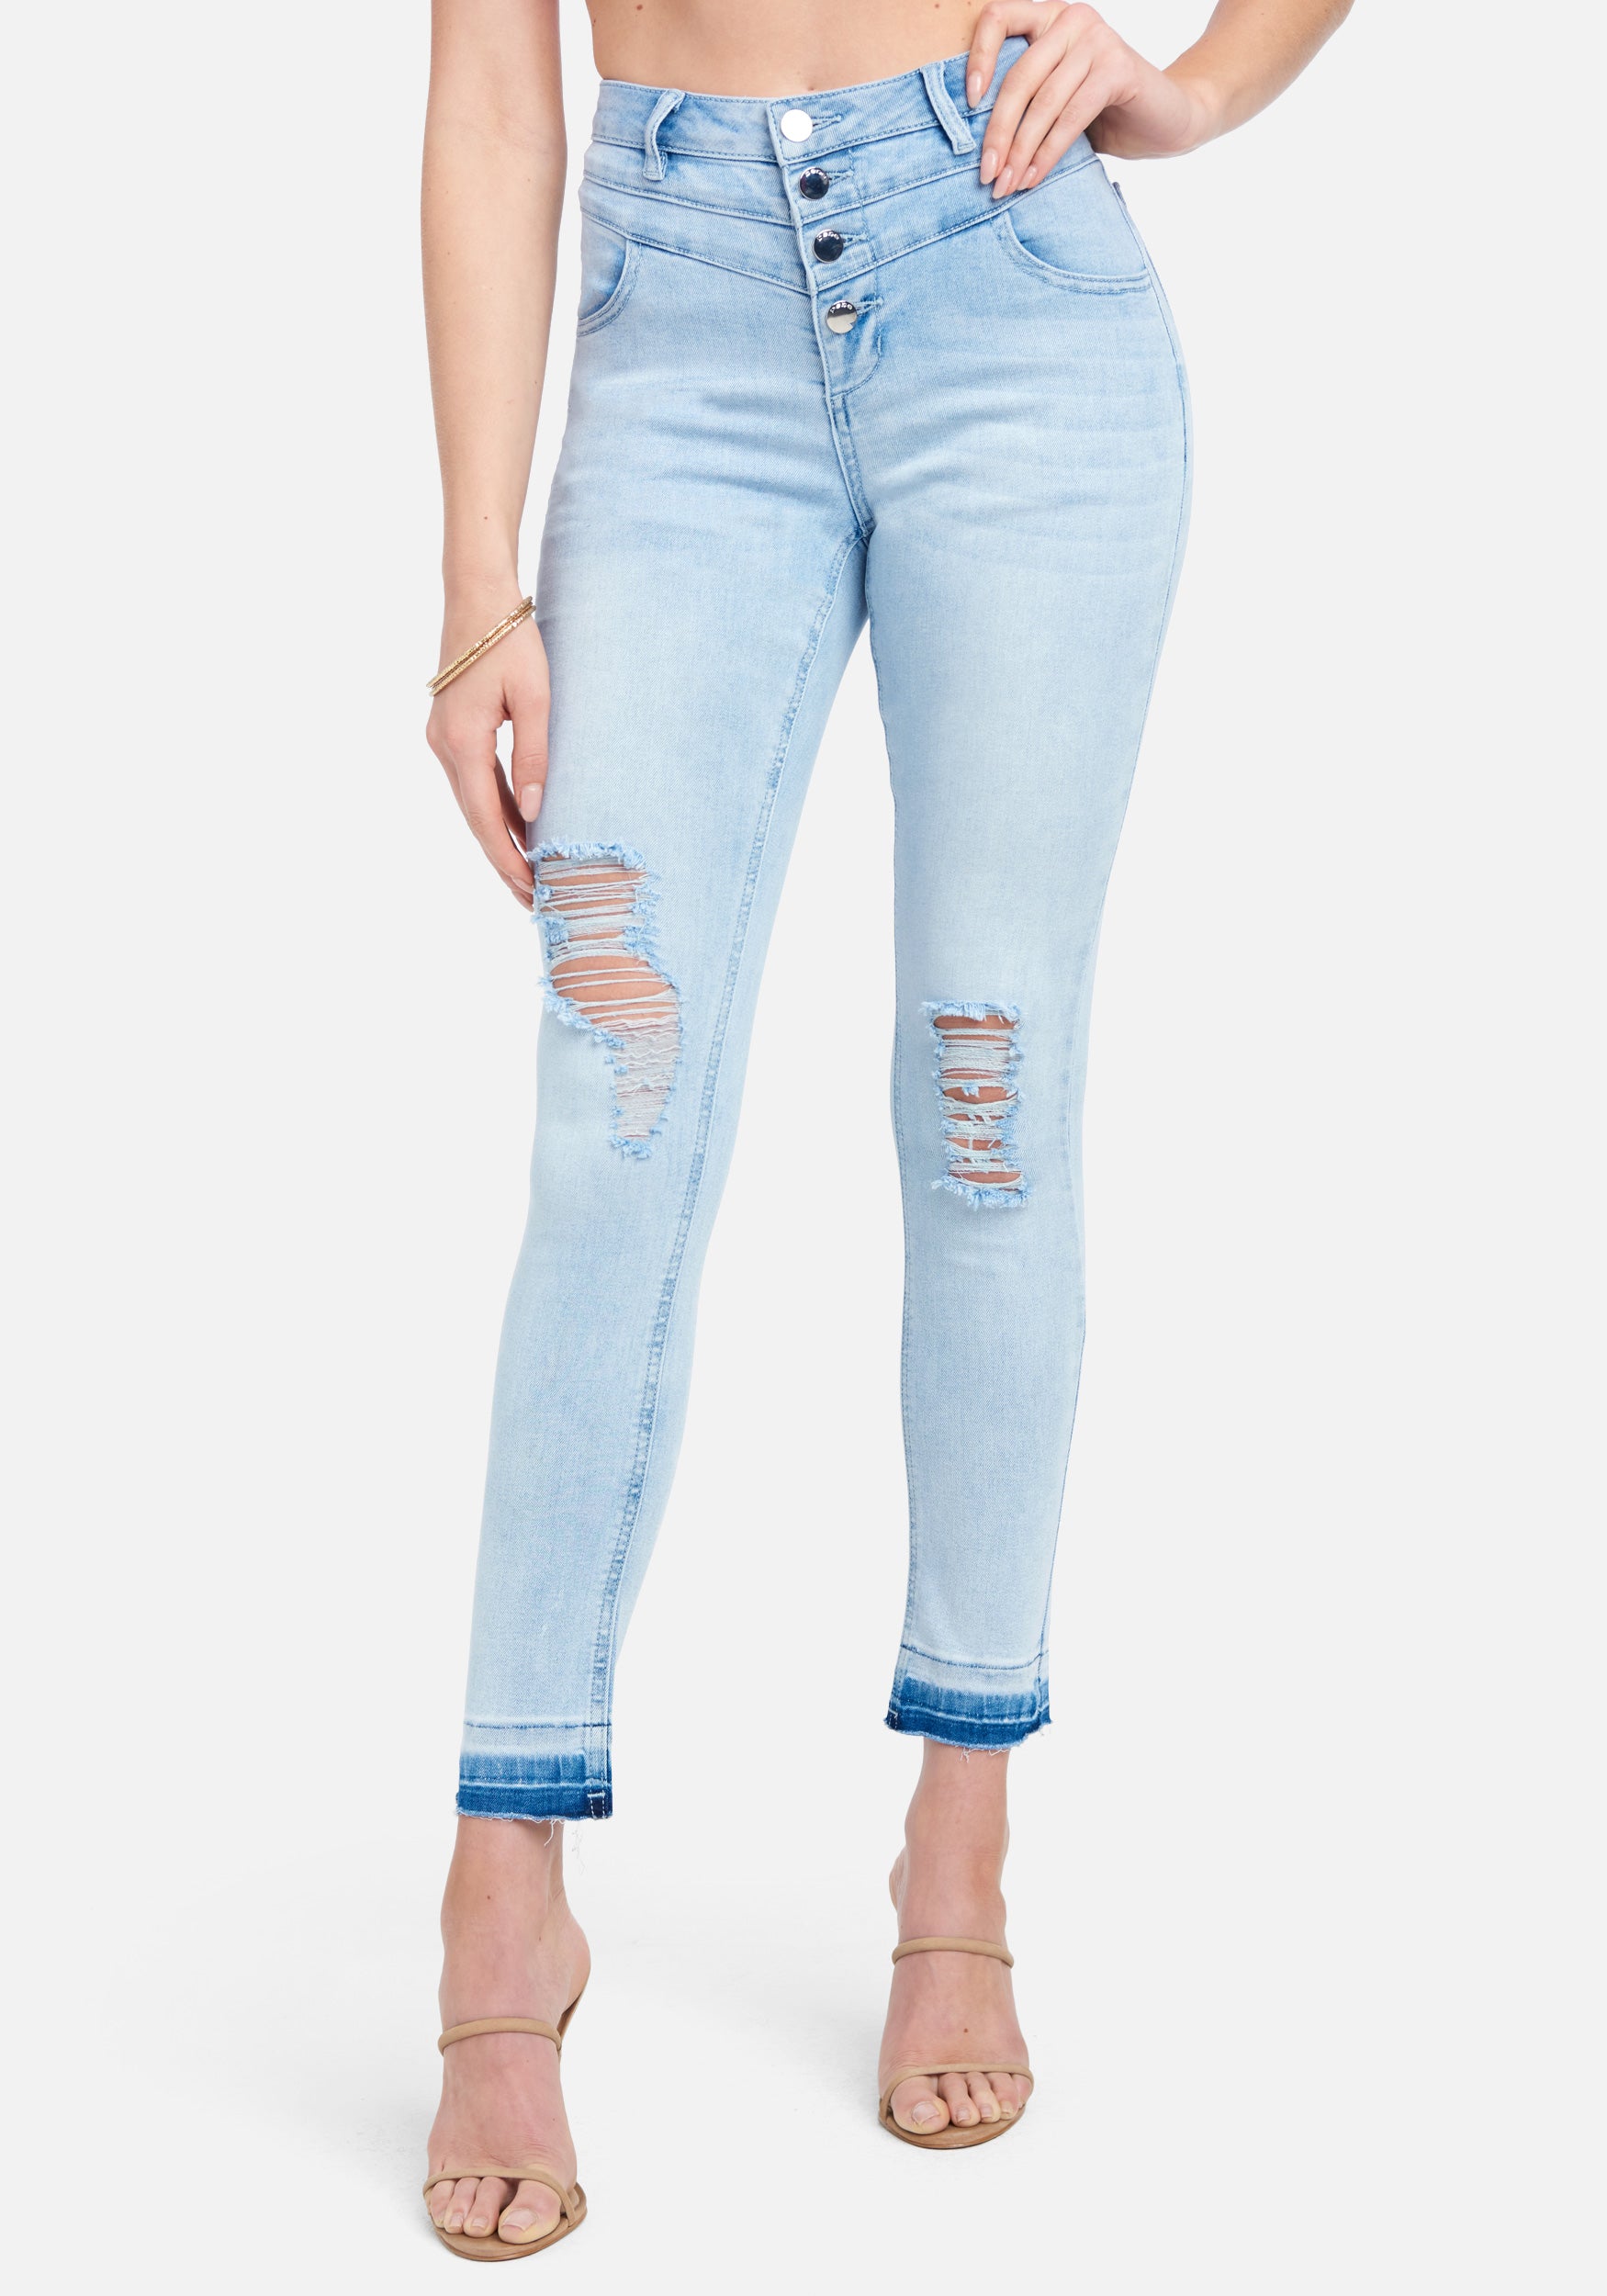 Bebe Women's High Waist Multi Button Skinny Jeans, Size 26 in Light Blue Wash Cotton/Spandex